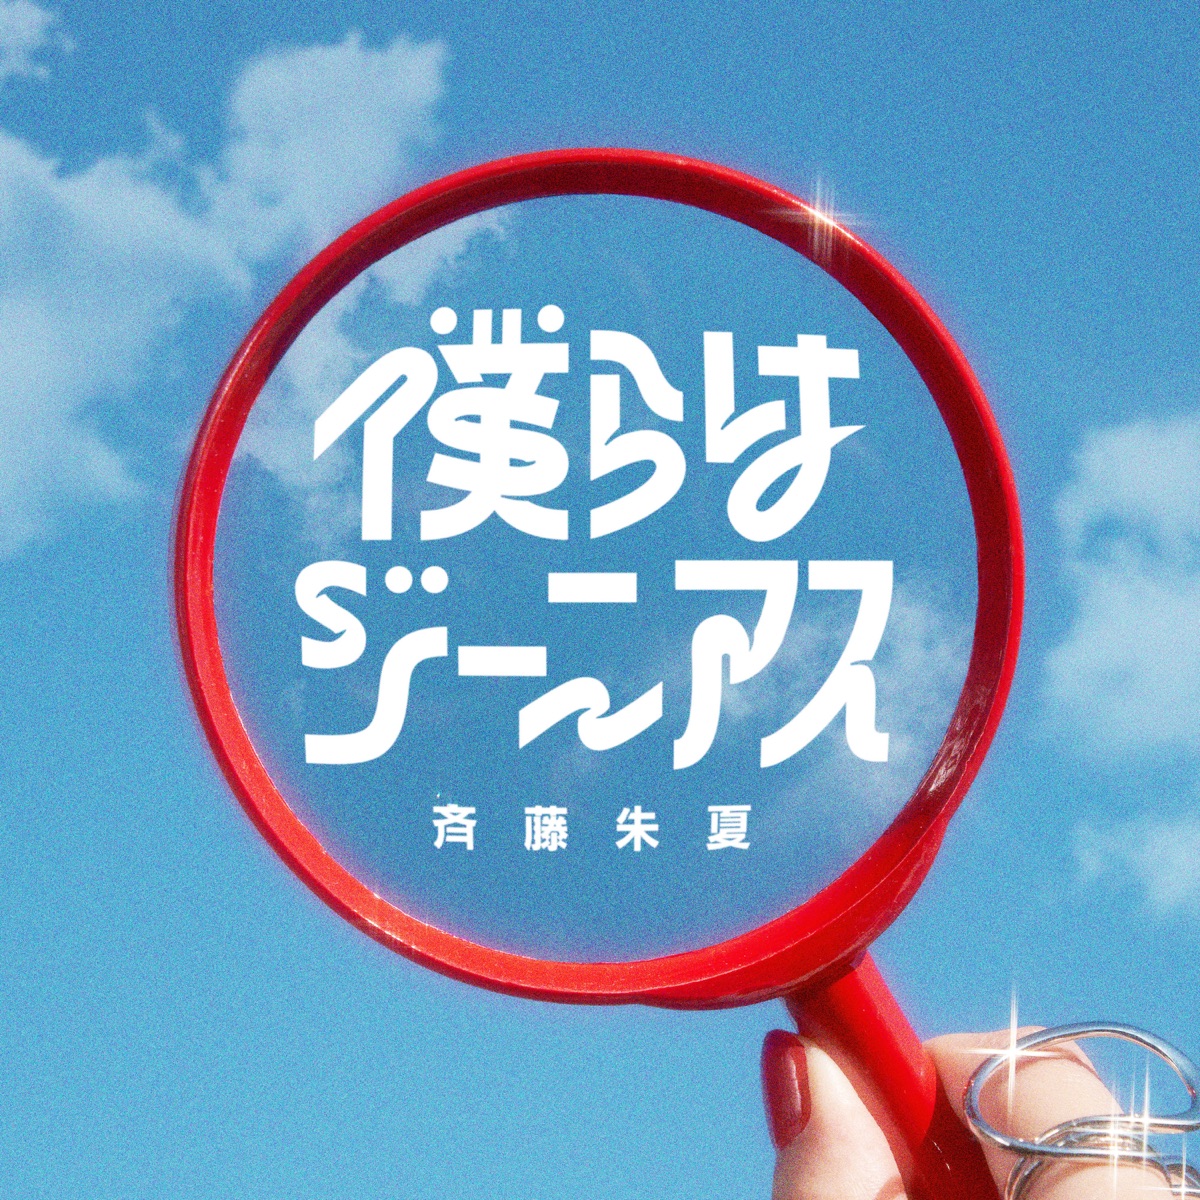 Cover art for『Shuka Saito - Bokura wa Genius』from the release『Bokura wa Genius』